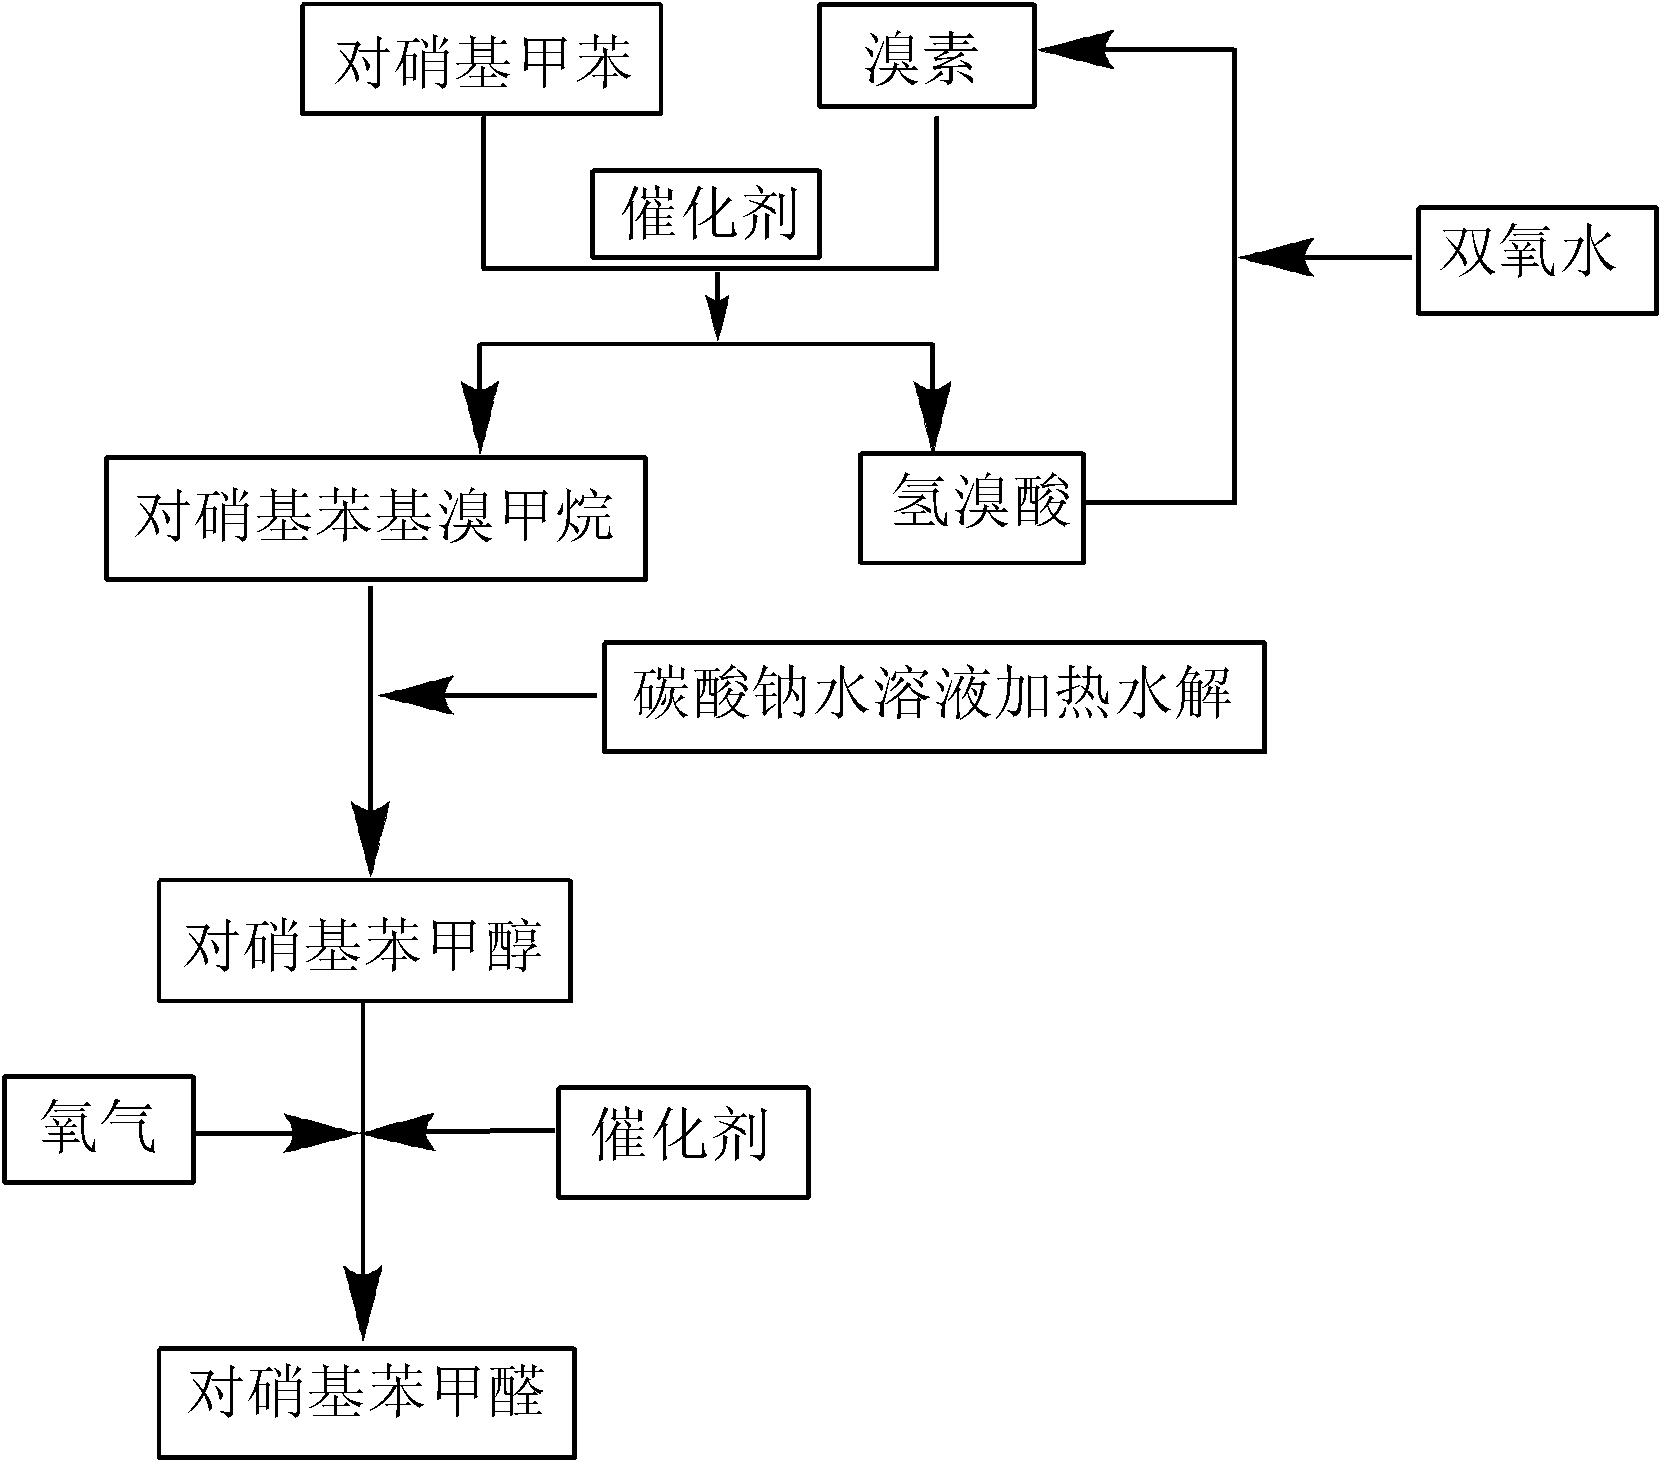 High selectivity synthesis method of p-nitrobenzaldehyde